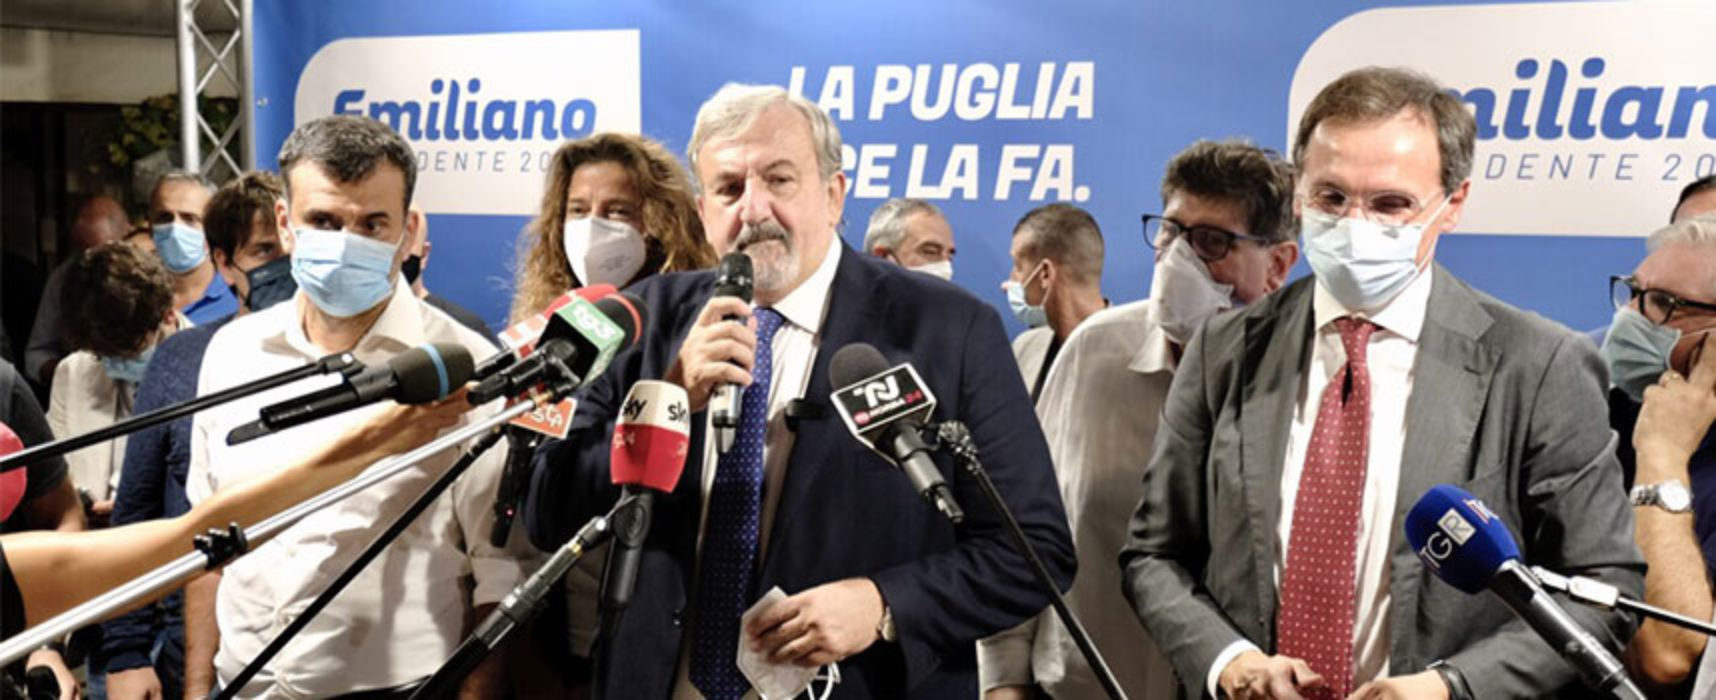 Regionali Puglia 2020: Emiliano si impone nettamente ancha a Bisceglie / Dati definitivi